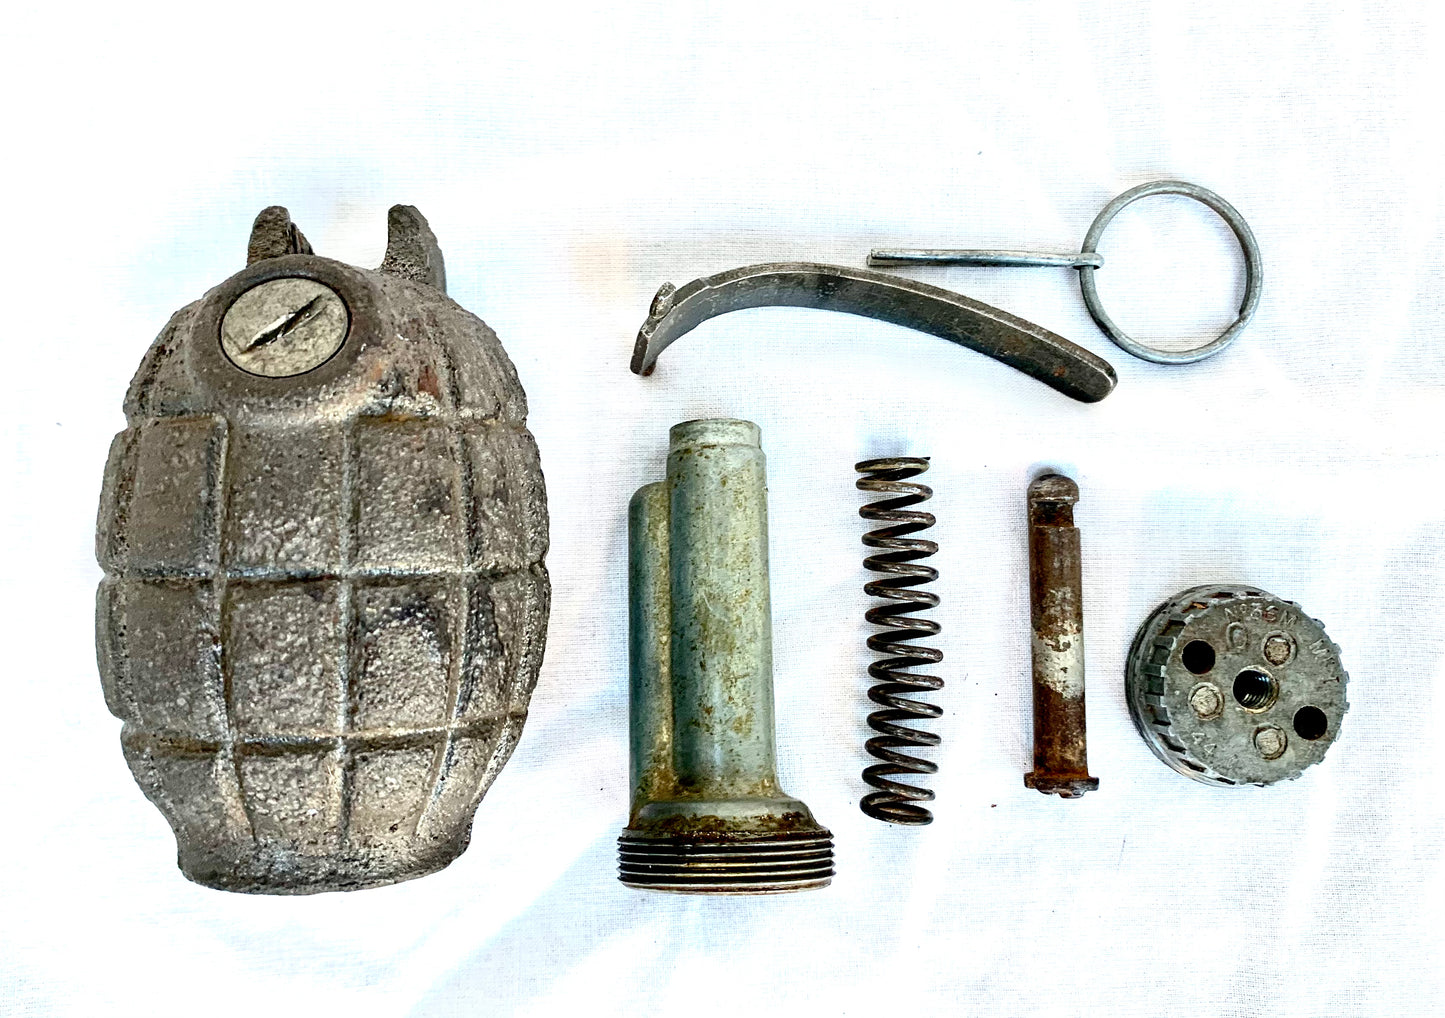 WW2 1944 British 36 Mills Grenade